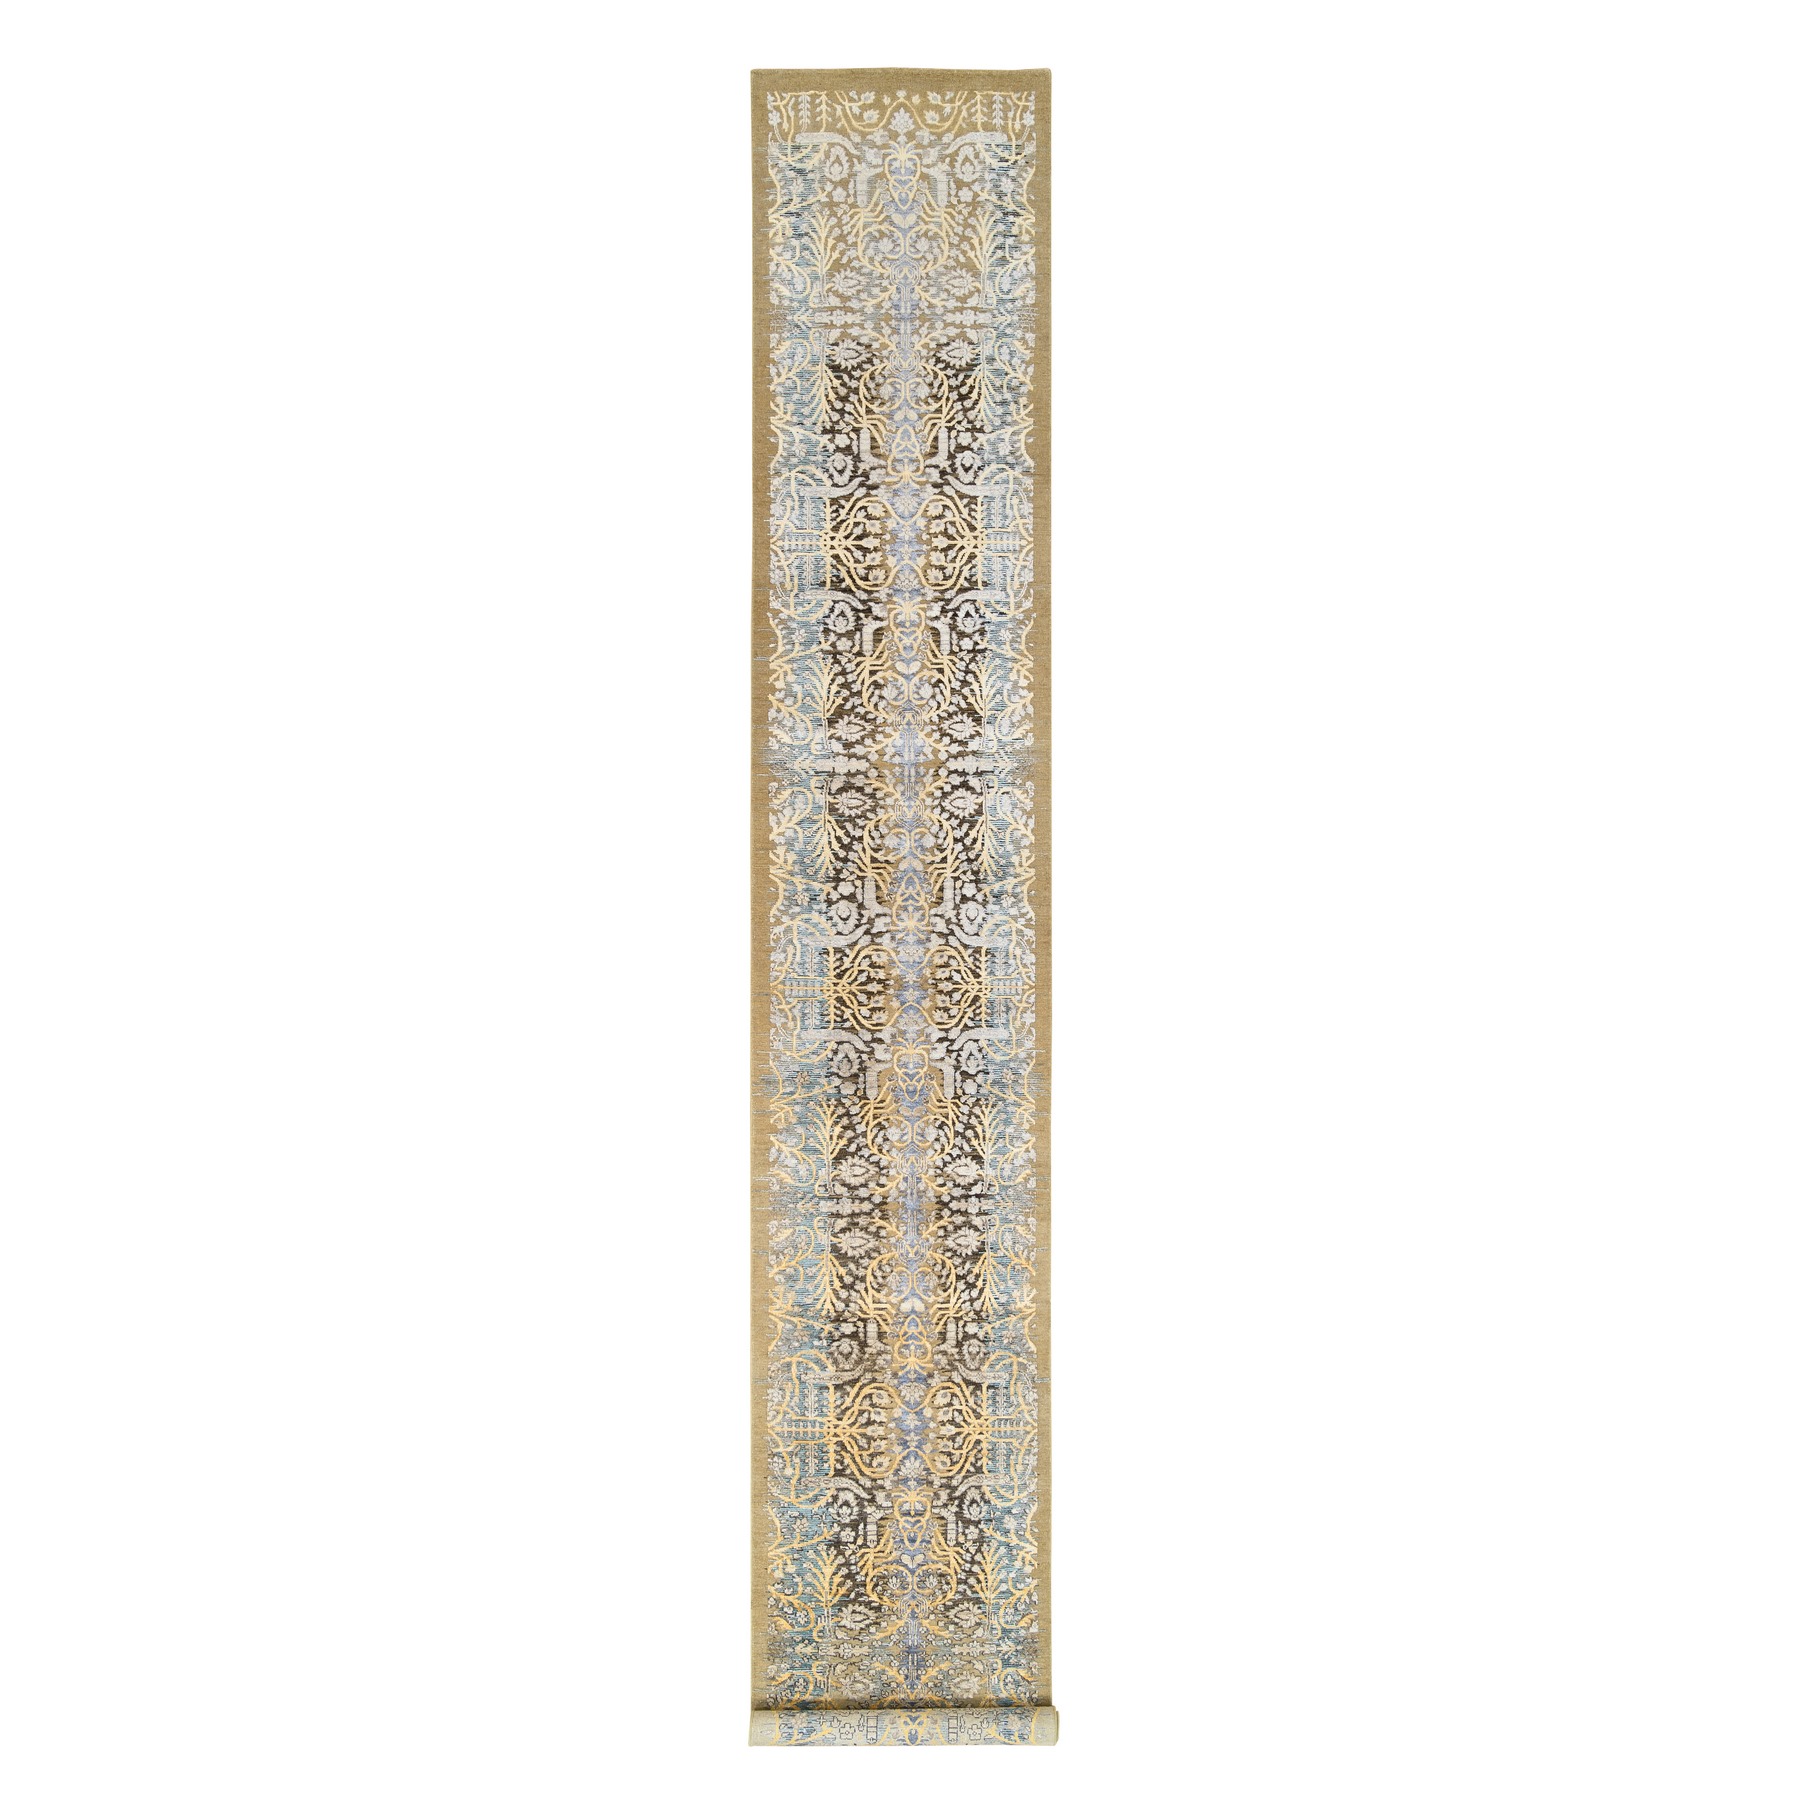 2'7"x15'10" Honey Brown, Silk With Textured Wool, Hand Woven, Transitional Sarouk, Oriental, XL Runner Rug 